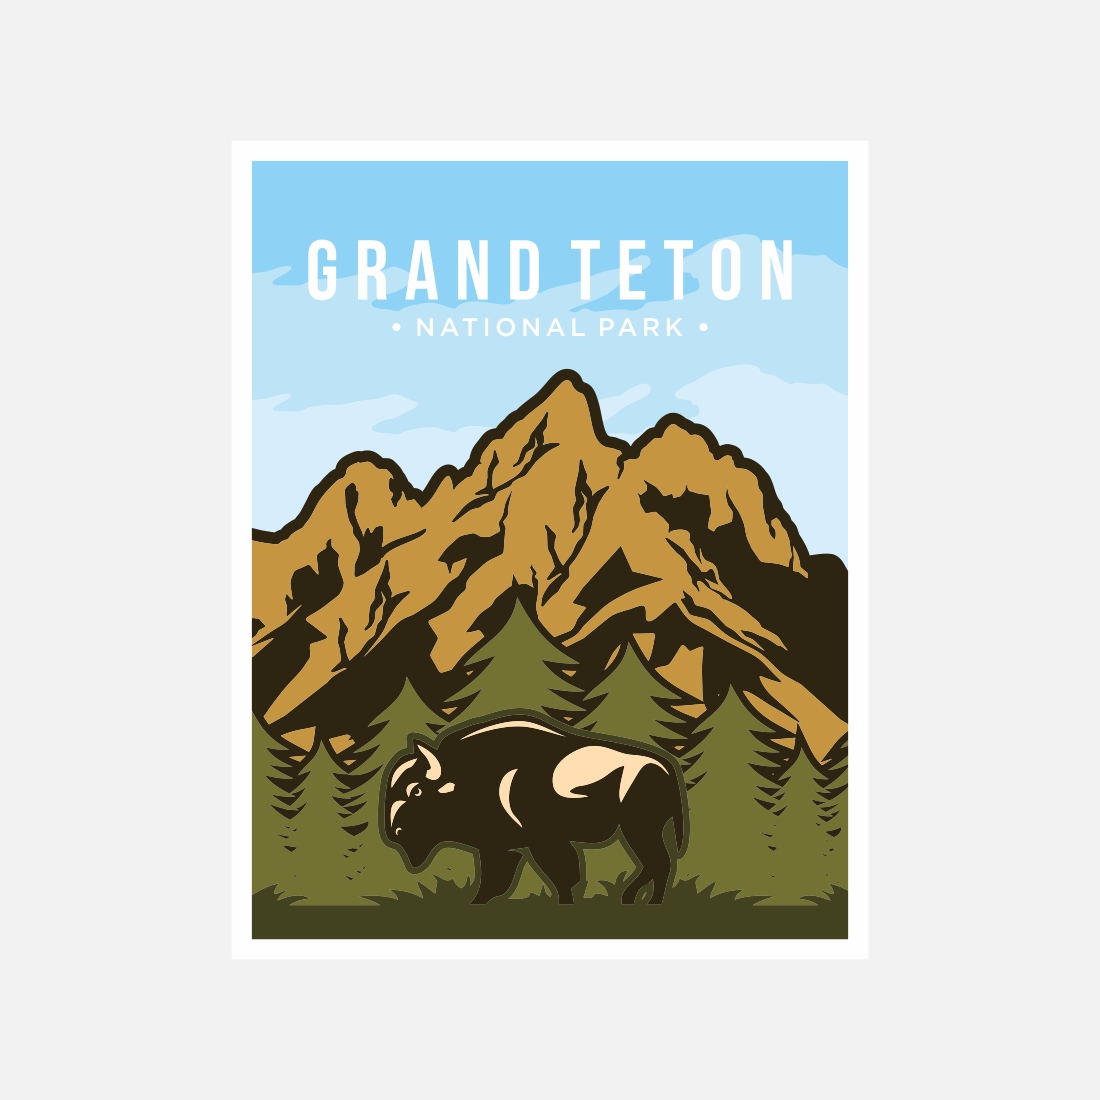 Grand Teton National Park Poster Vector Illustration - $8 cover image.